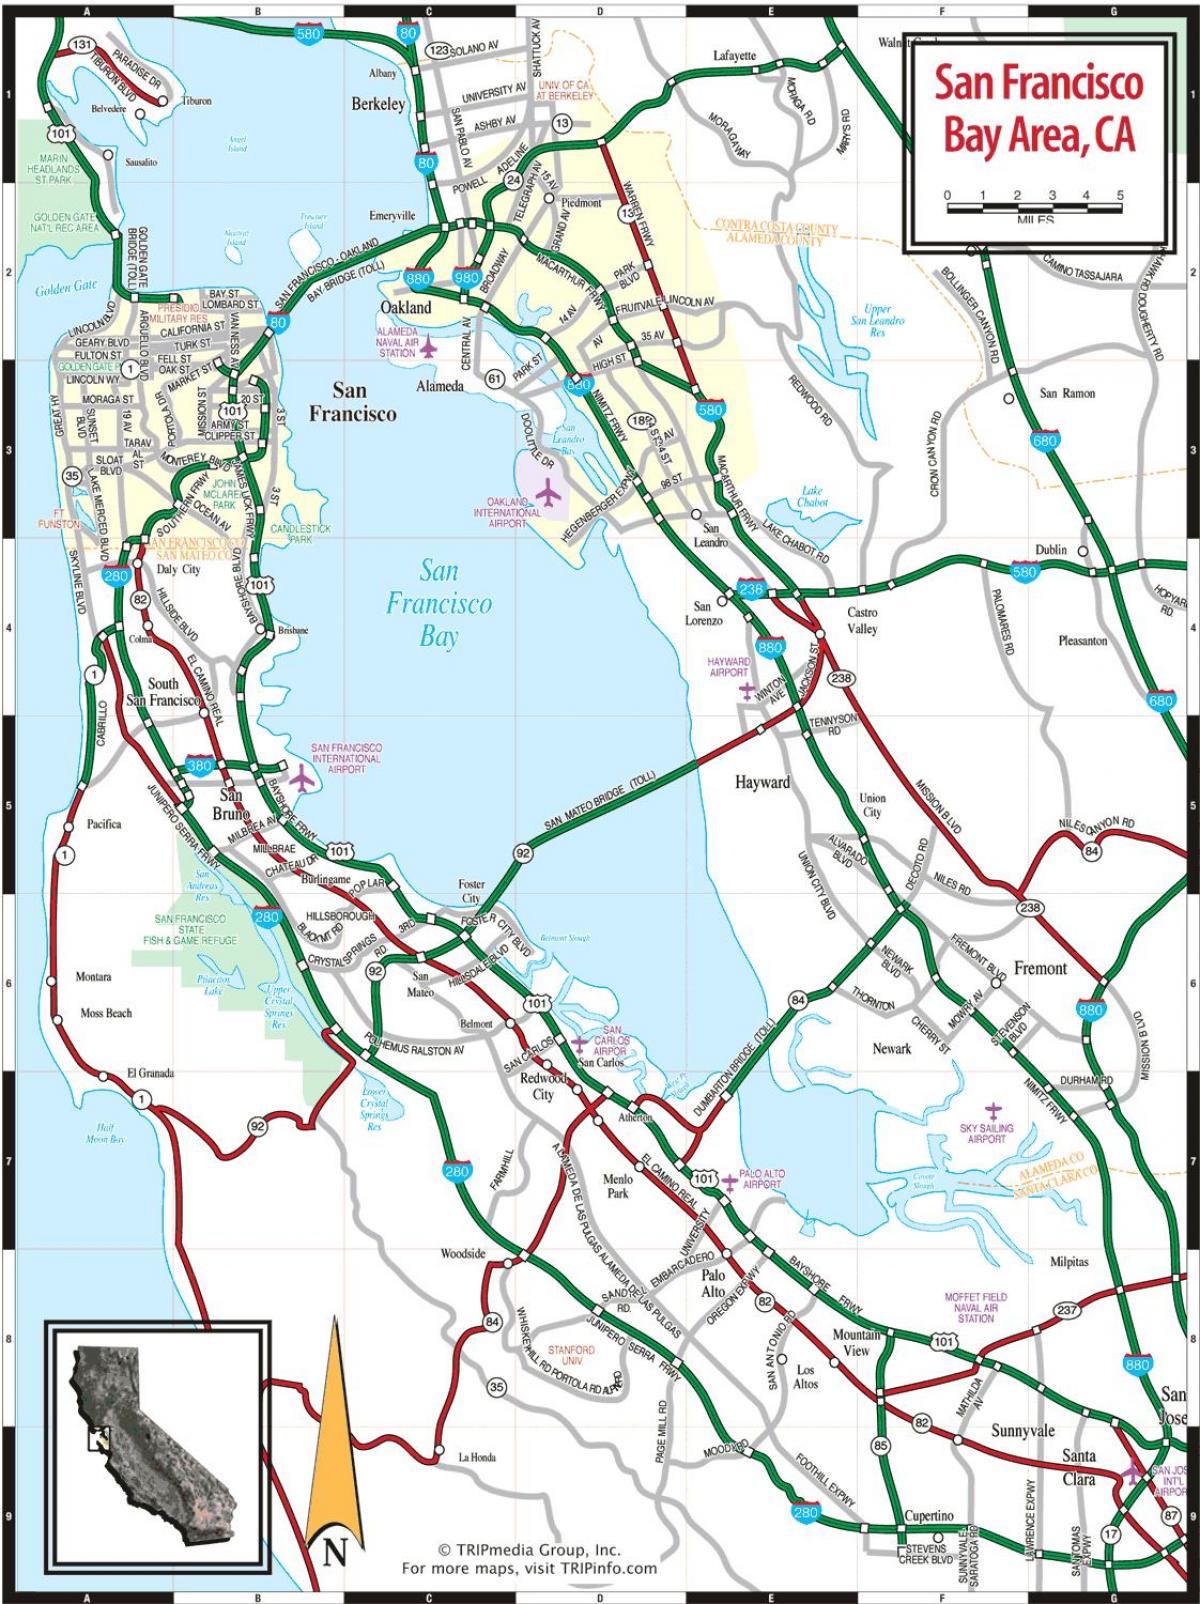 kort over San Francisco bay area